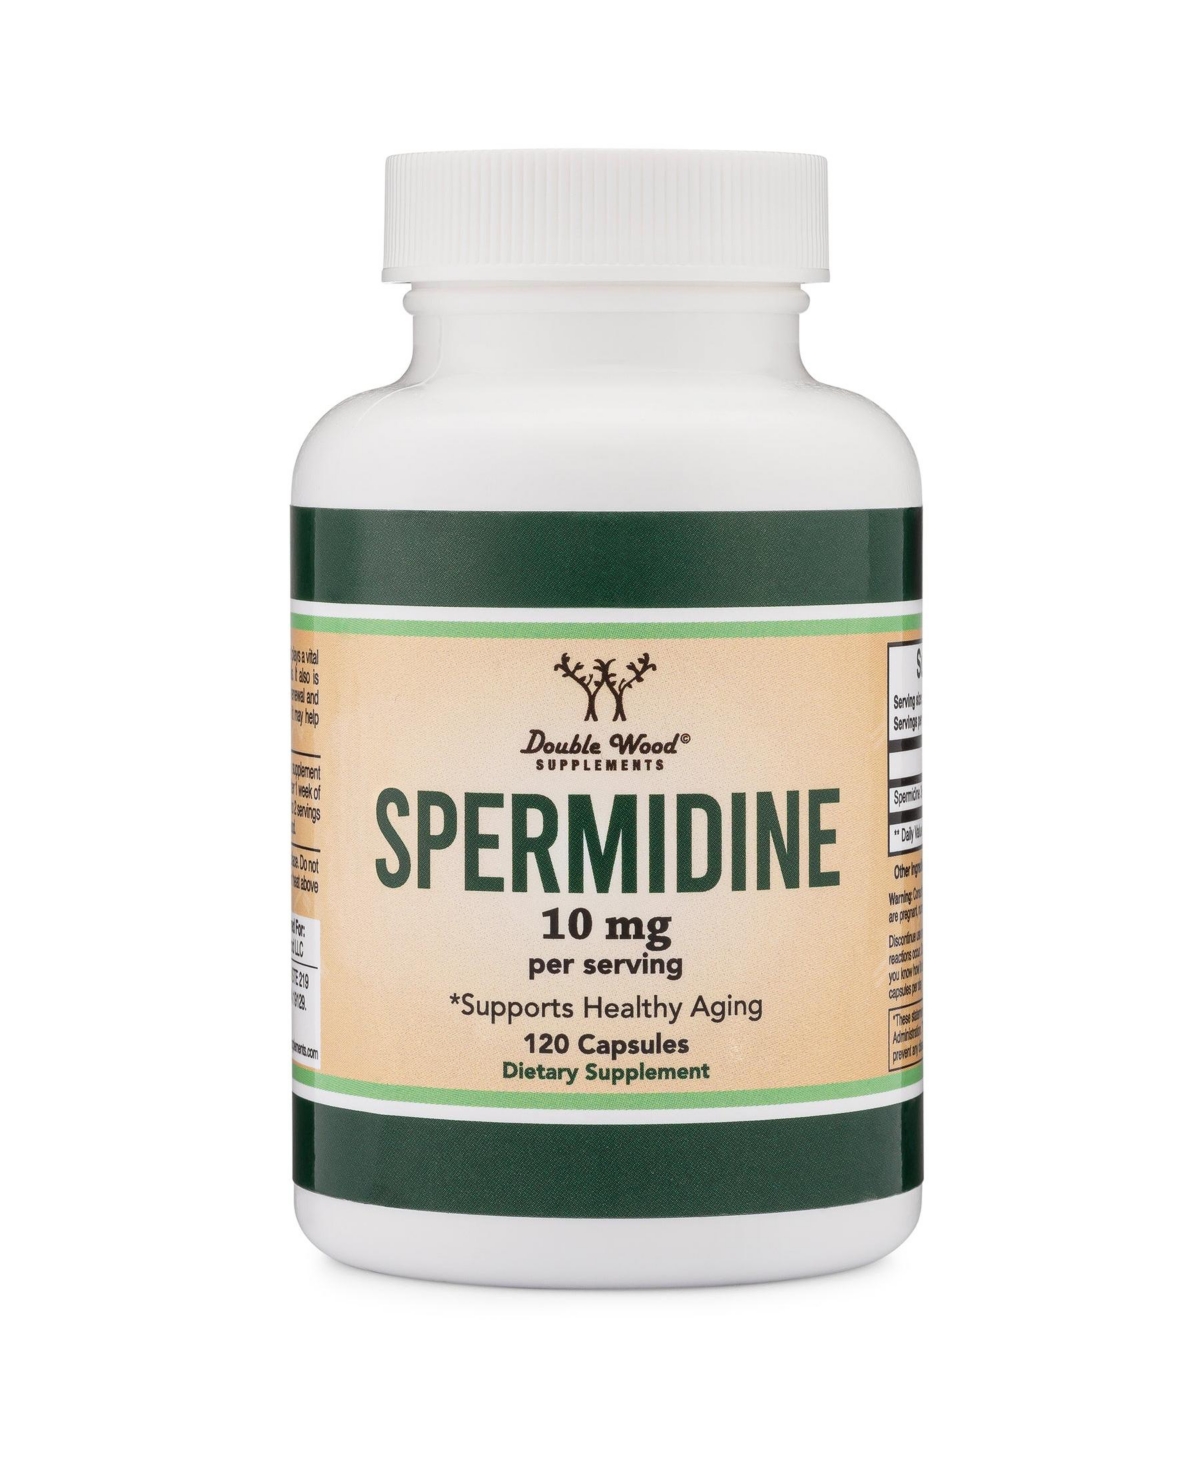 Spermidine - 120 capsules, 10 mg servings